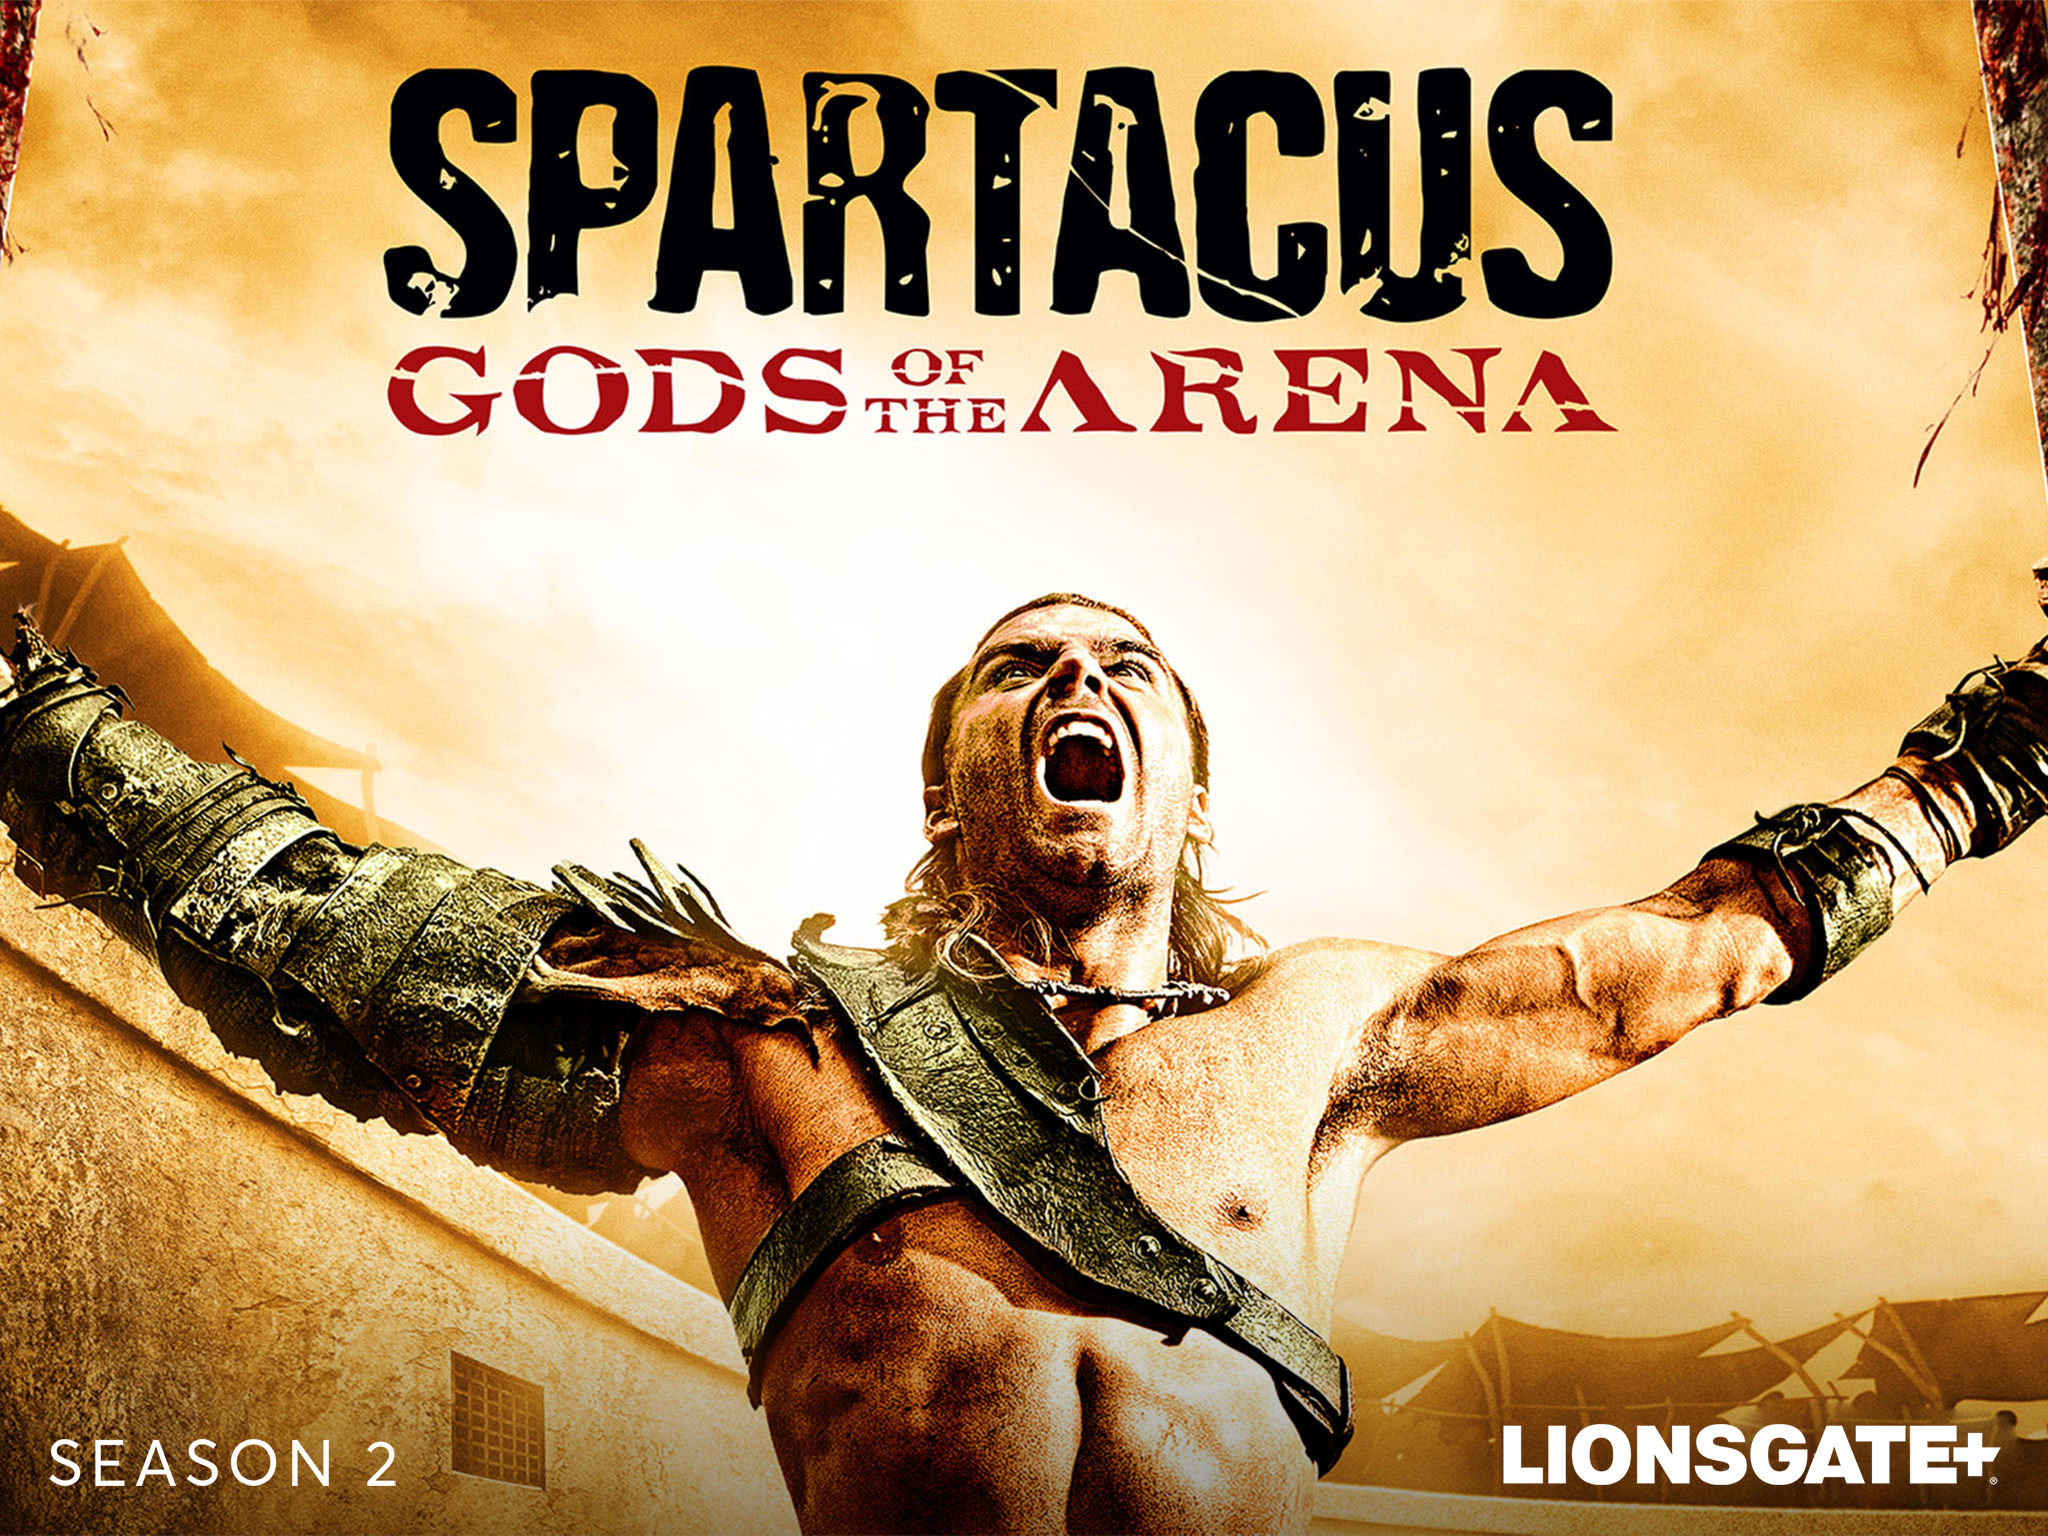 brandi wade recommends spartacus season 1 torrent pic